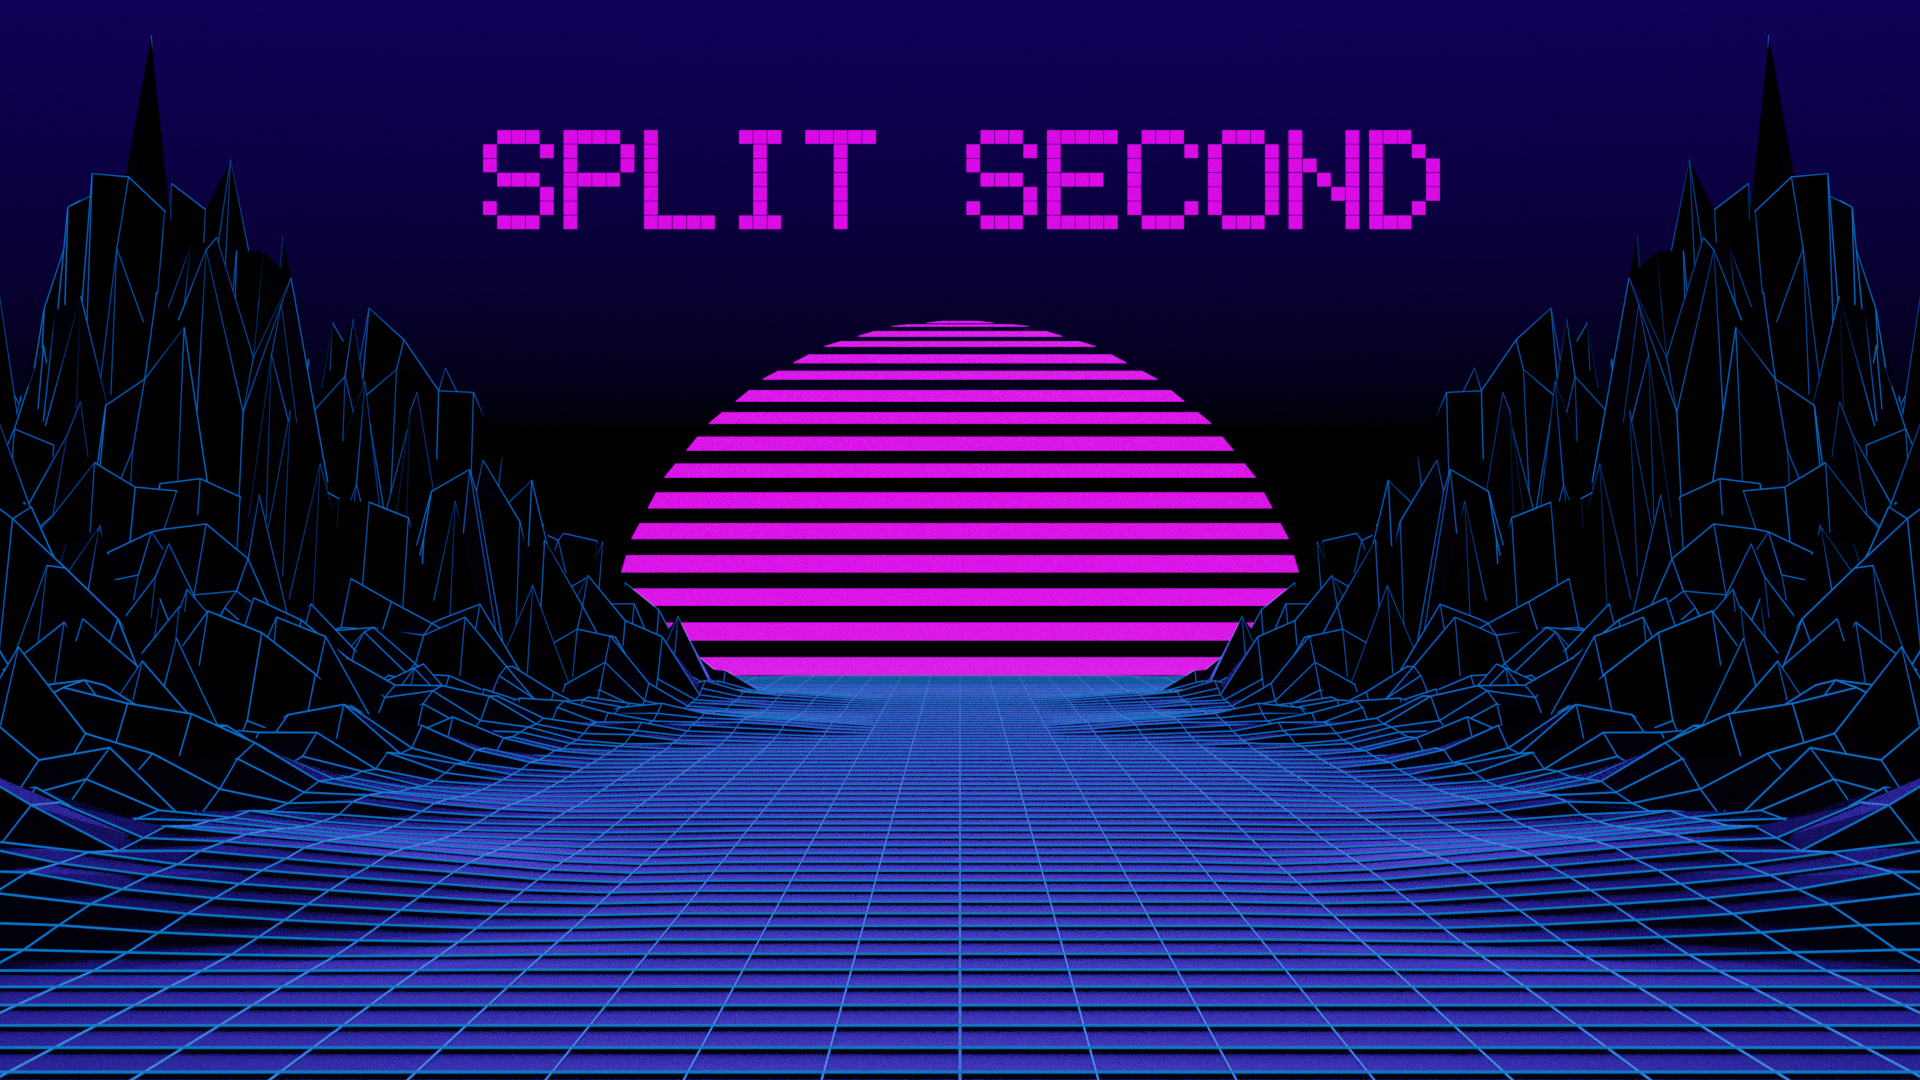 SplitSecond